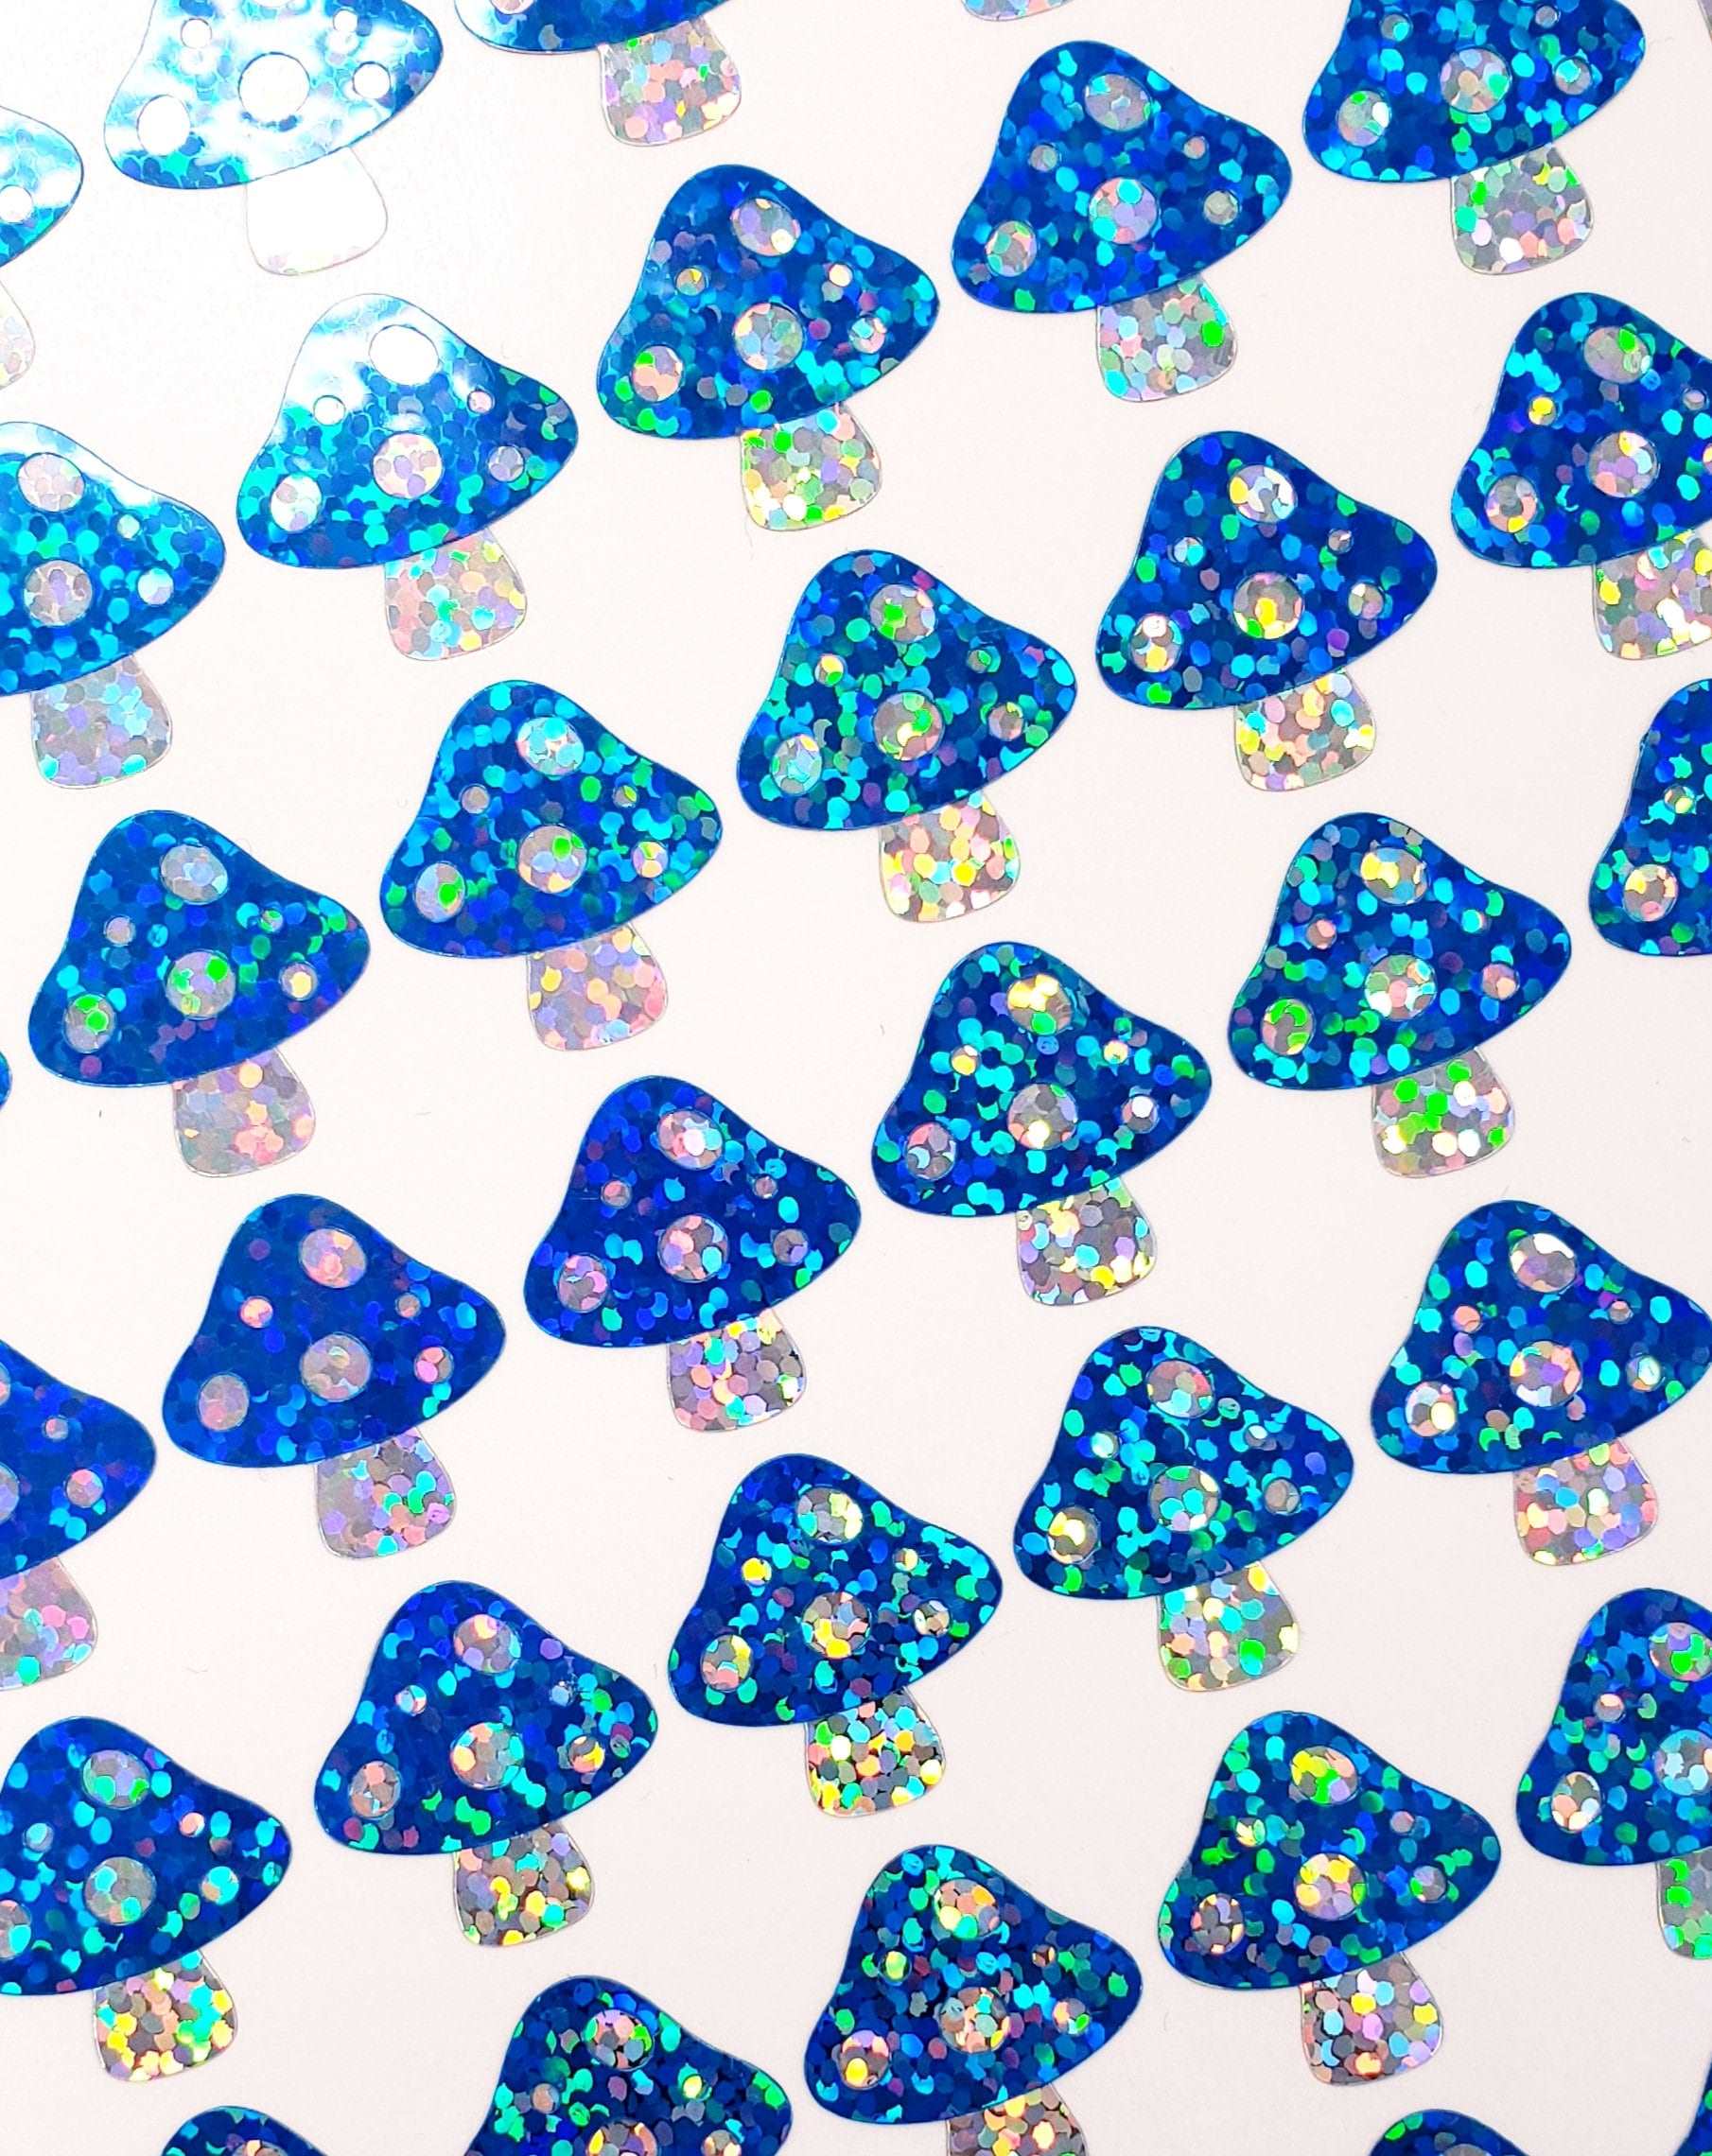 Blue Mushrooms Sticker Sheet, set of 48 small sparkly blue capped mushroom vinyl decals for notebooks, journals, envelopes Cottagecore decor